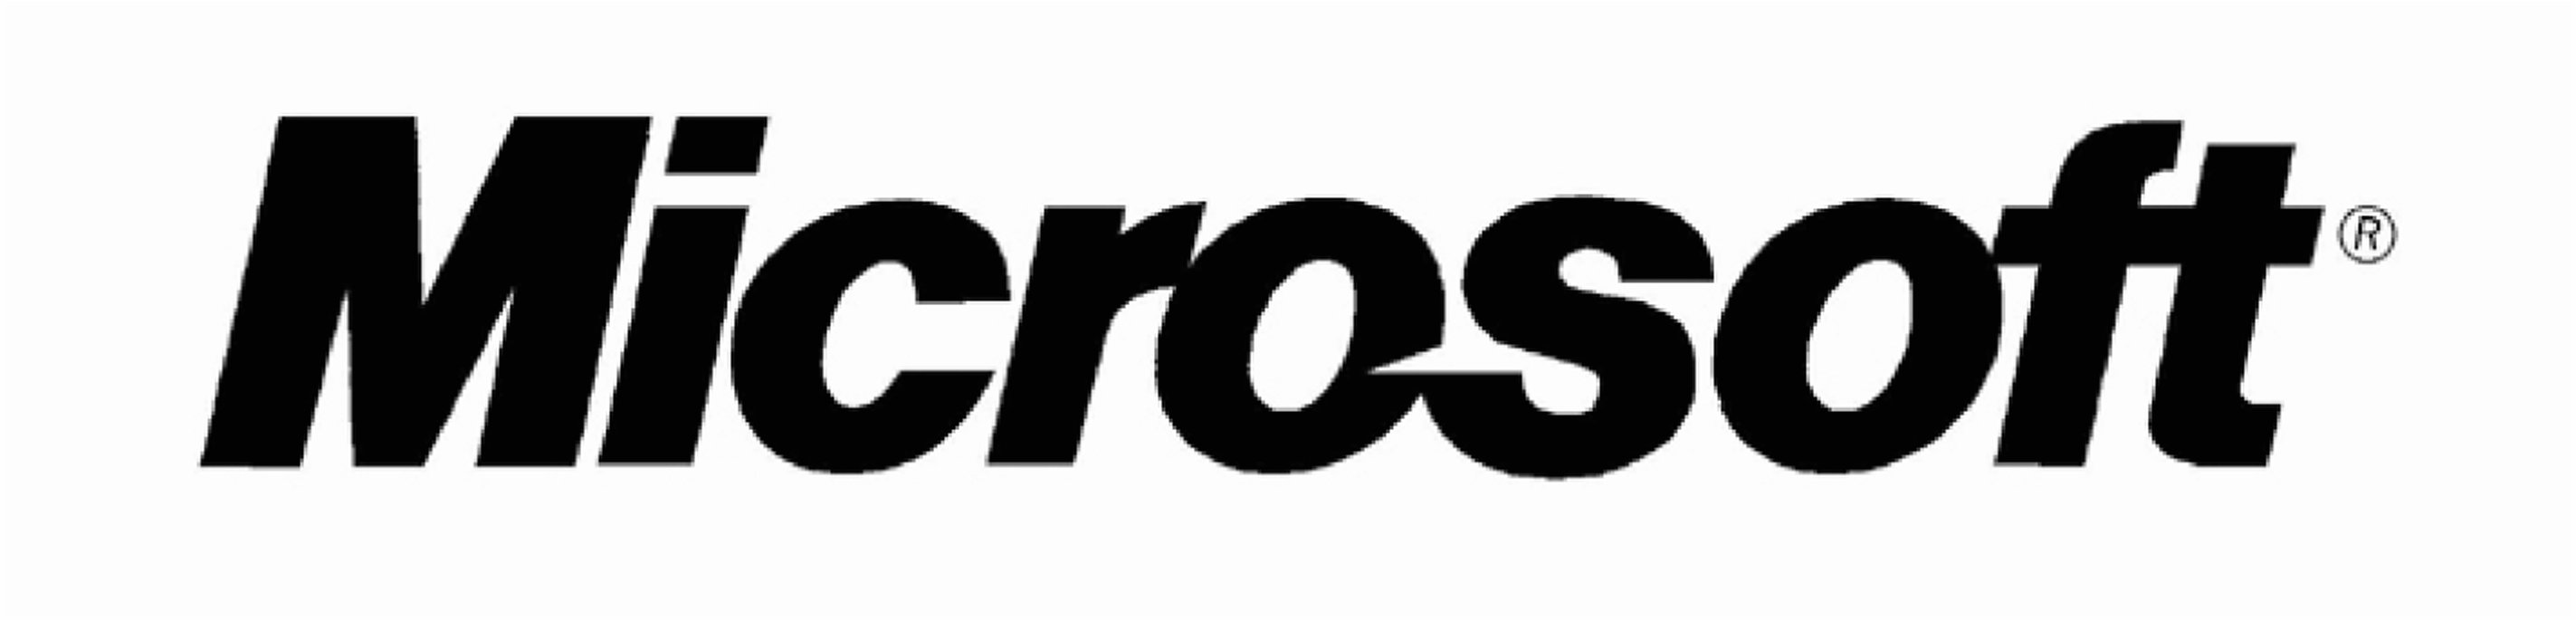 Ubiquitous Taxi Advertising client Microsoft  logo